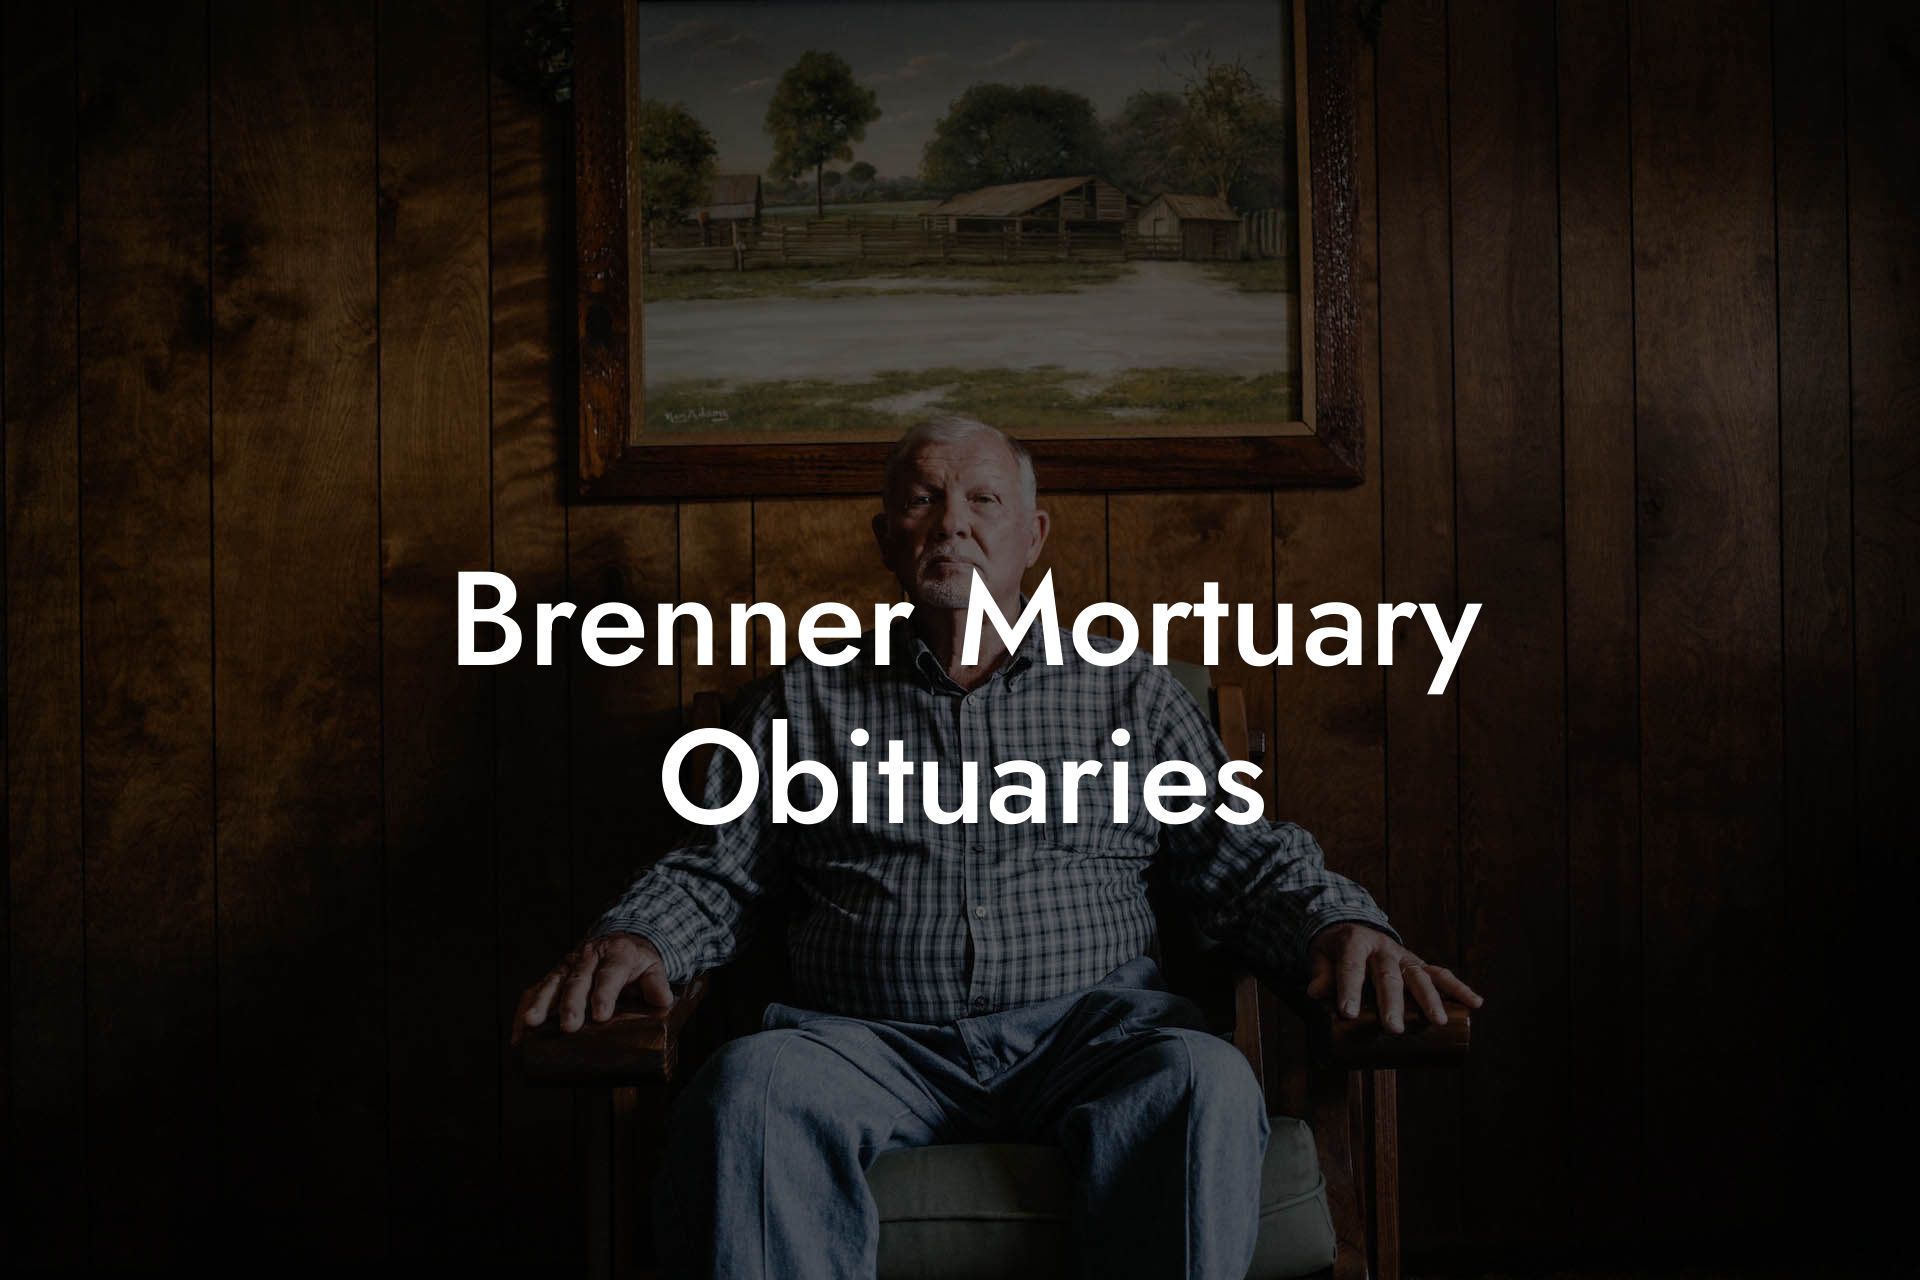 Brenner Mortuary Obituaries